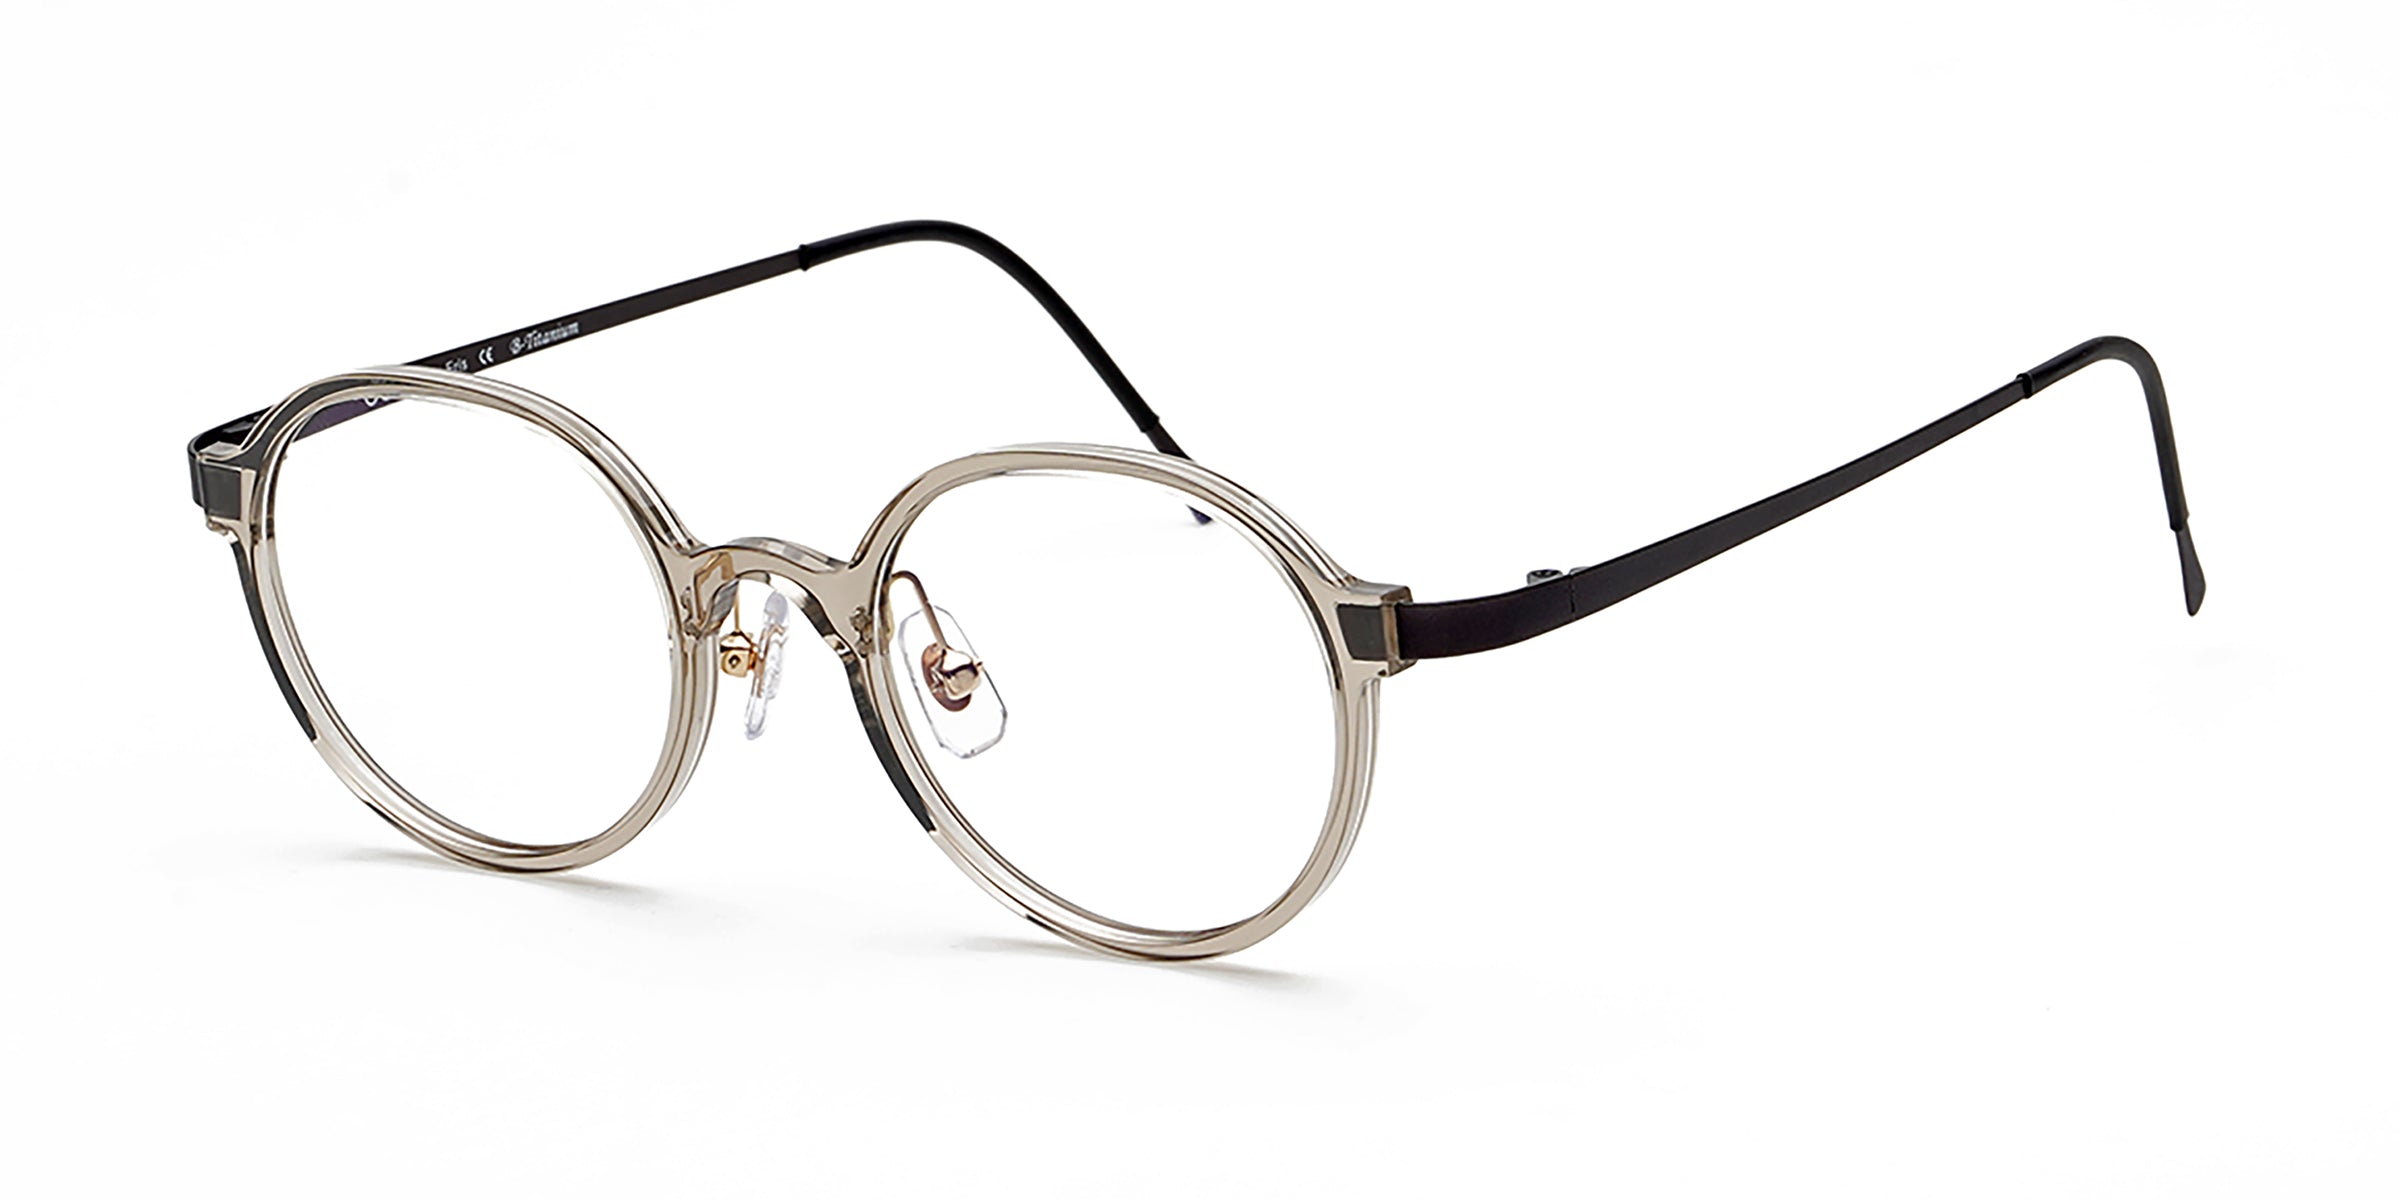 odd transparent gray eyeglasses frames angled view